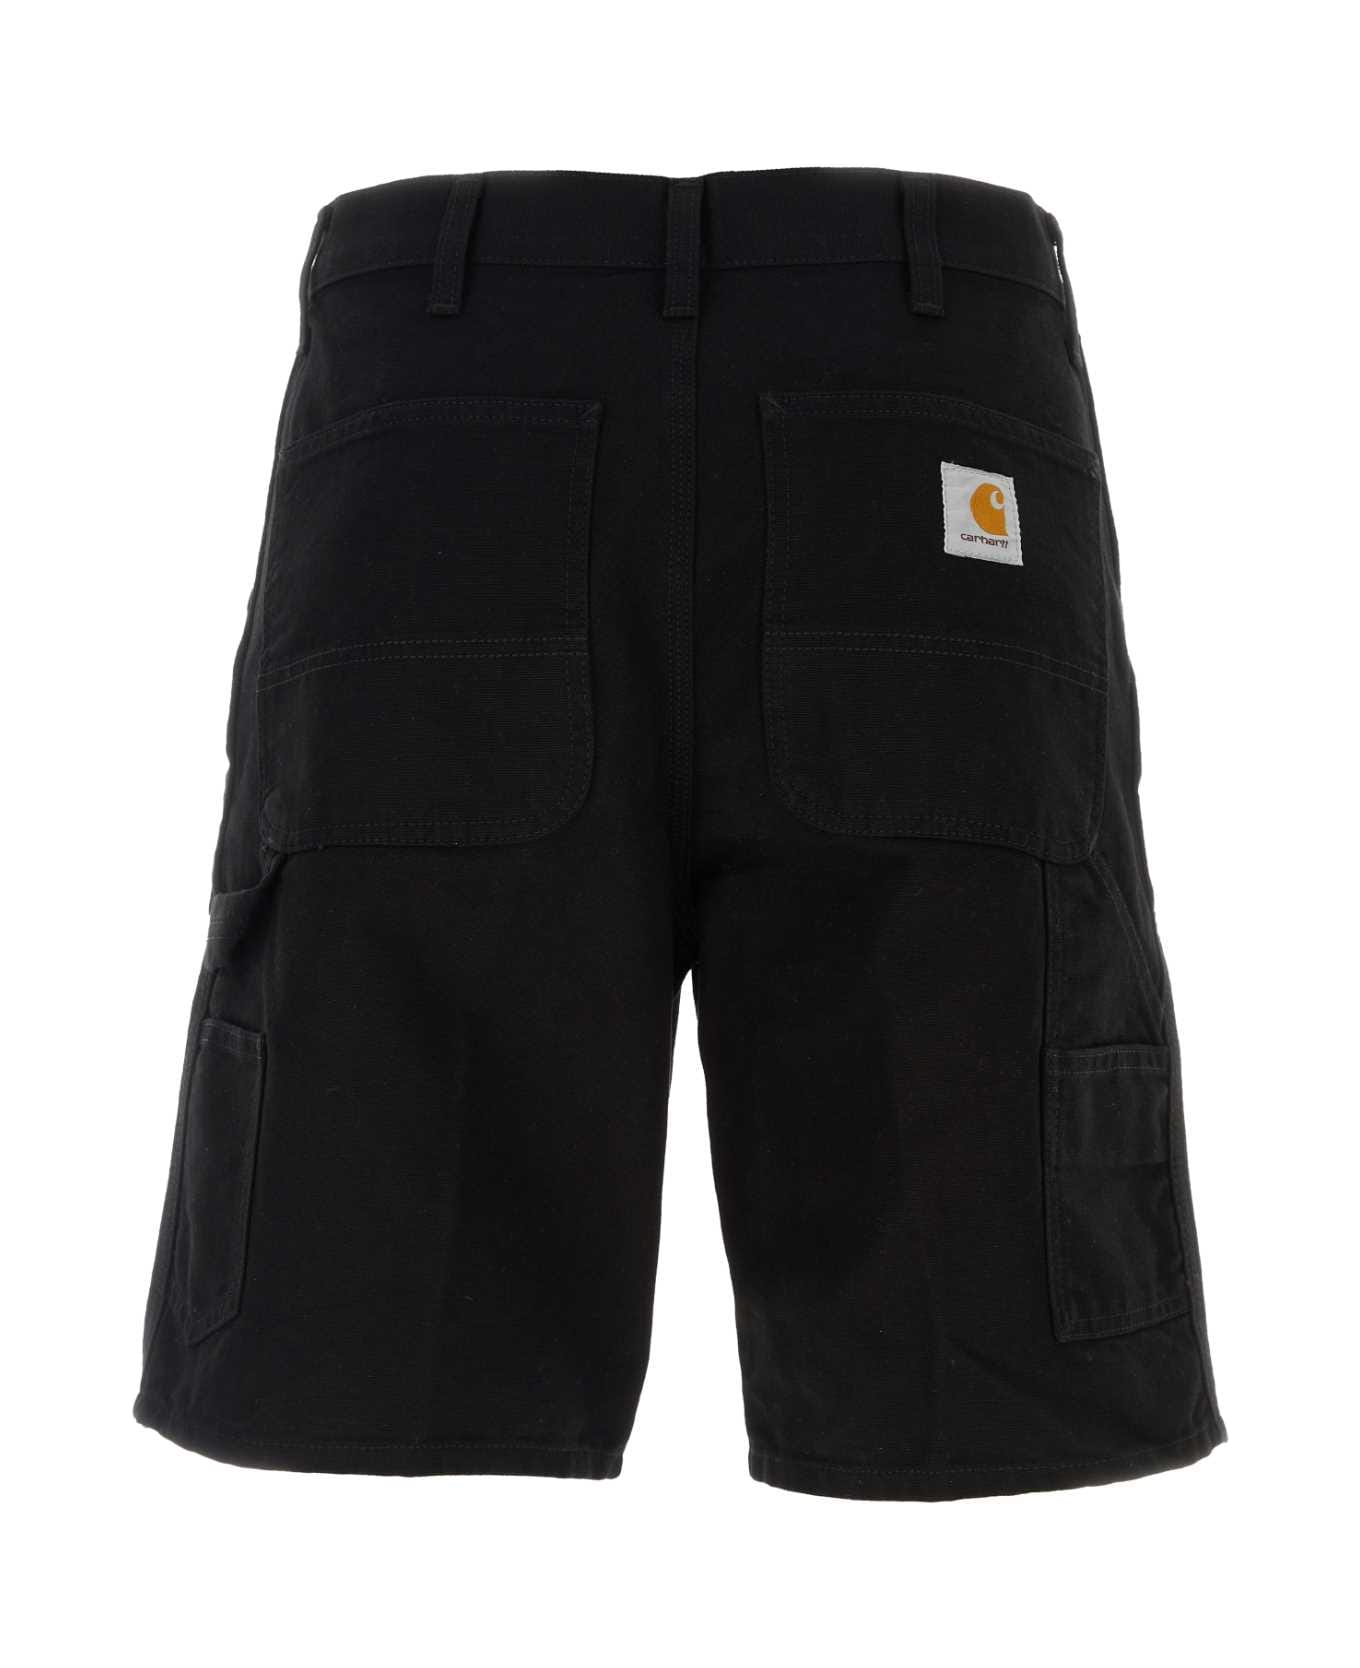 Carhartt Black Cotton Single Knee Short - Black